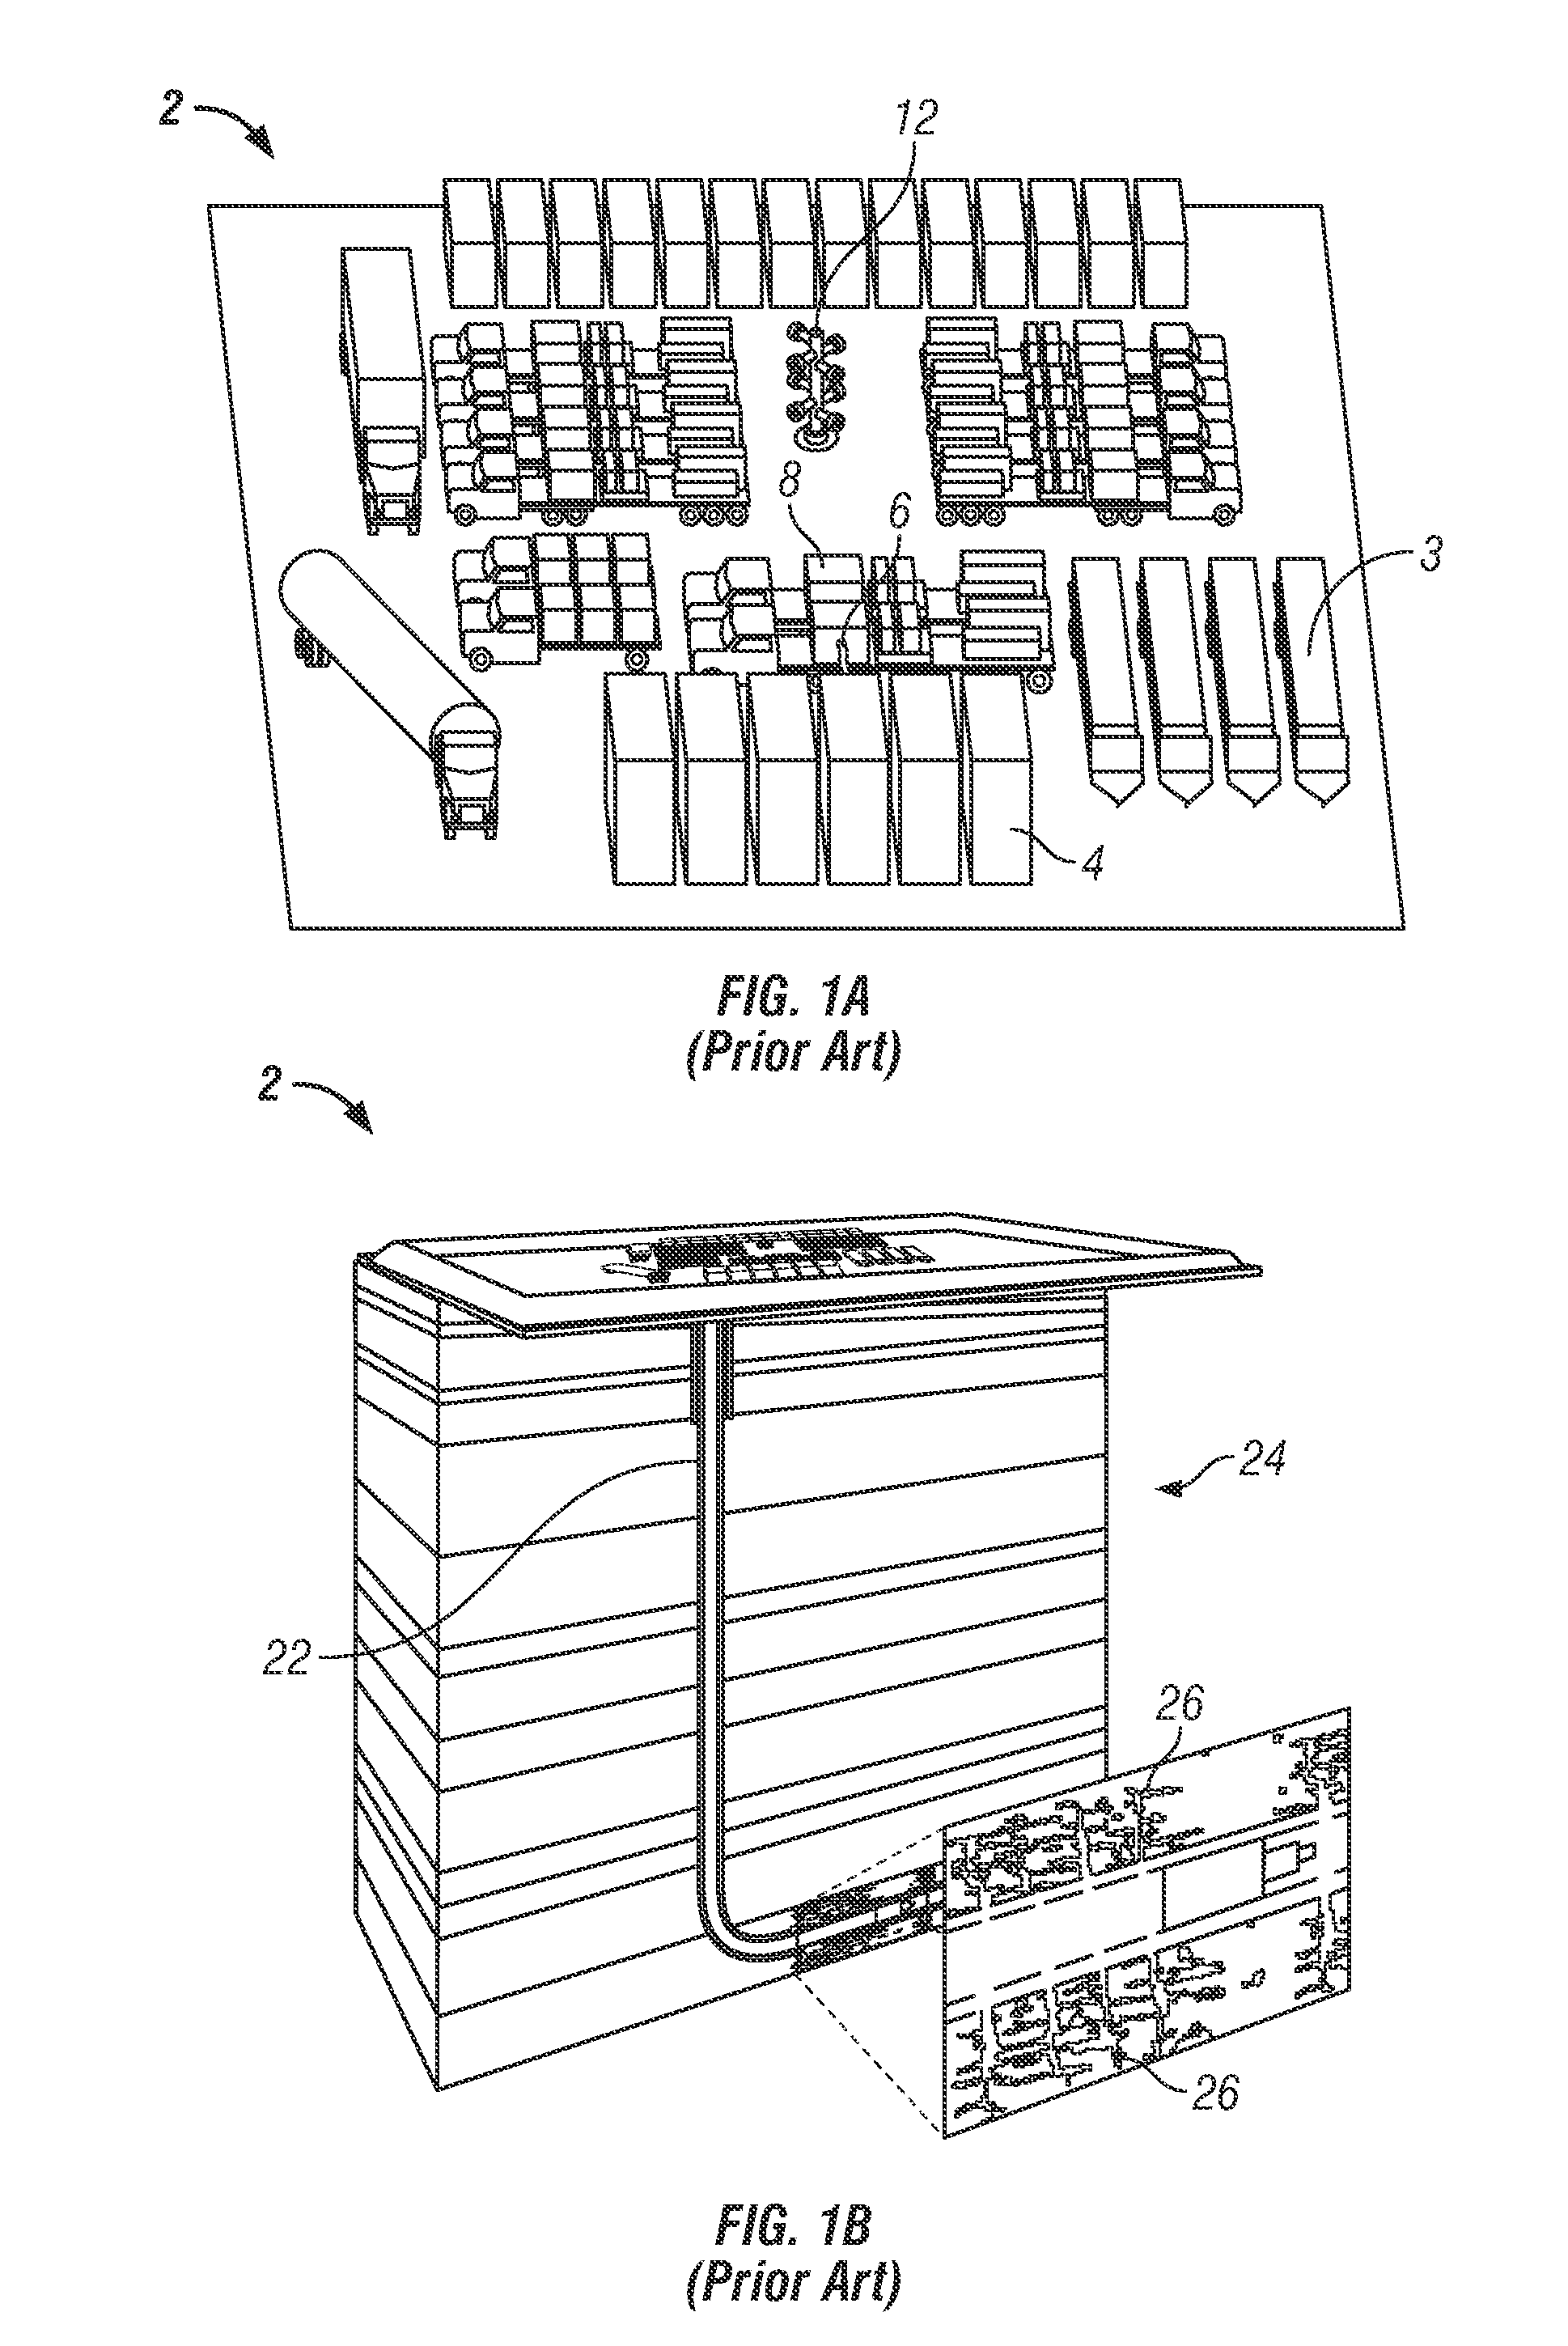 Modular skid system for manifolds